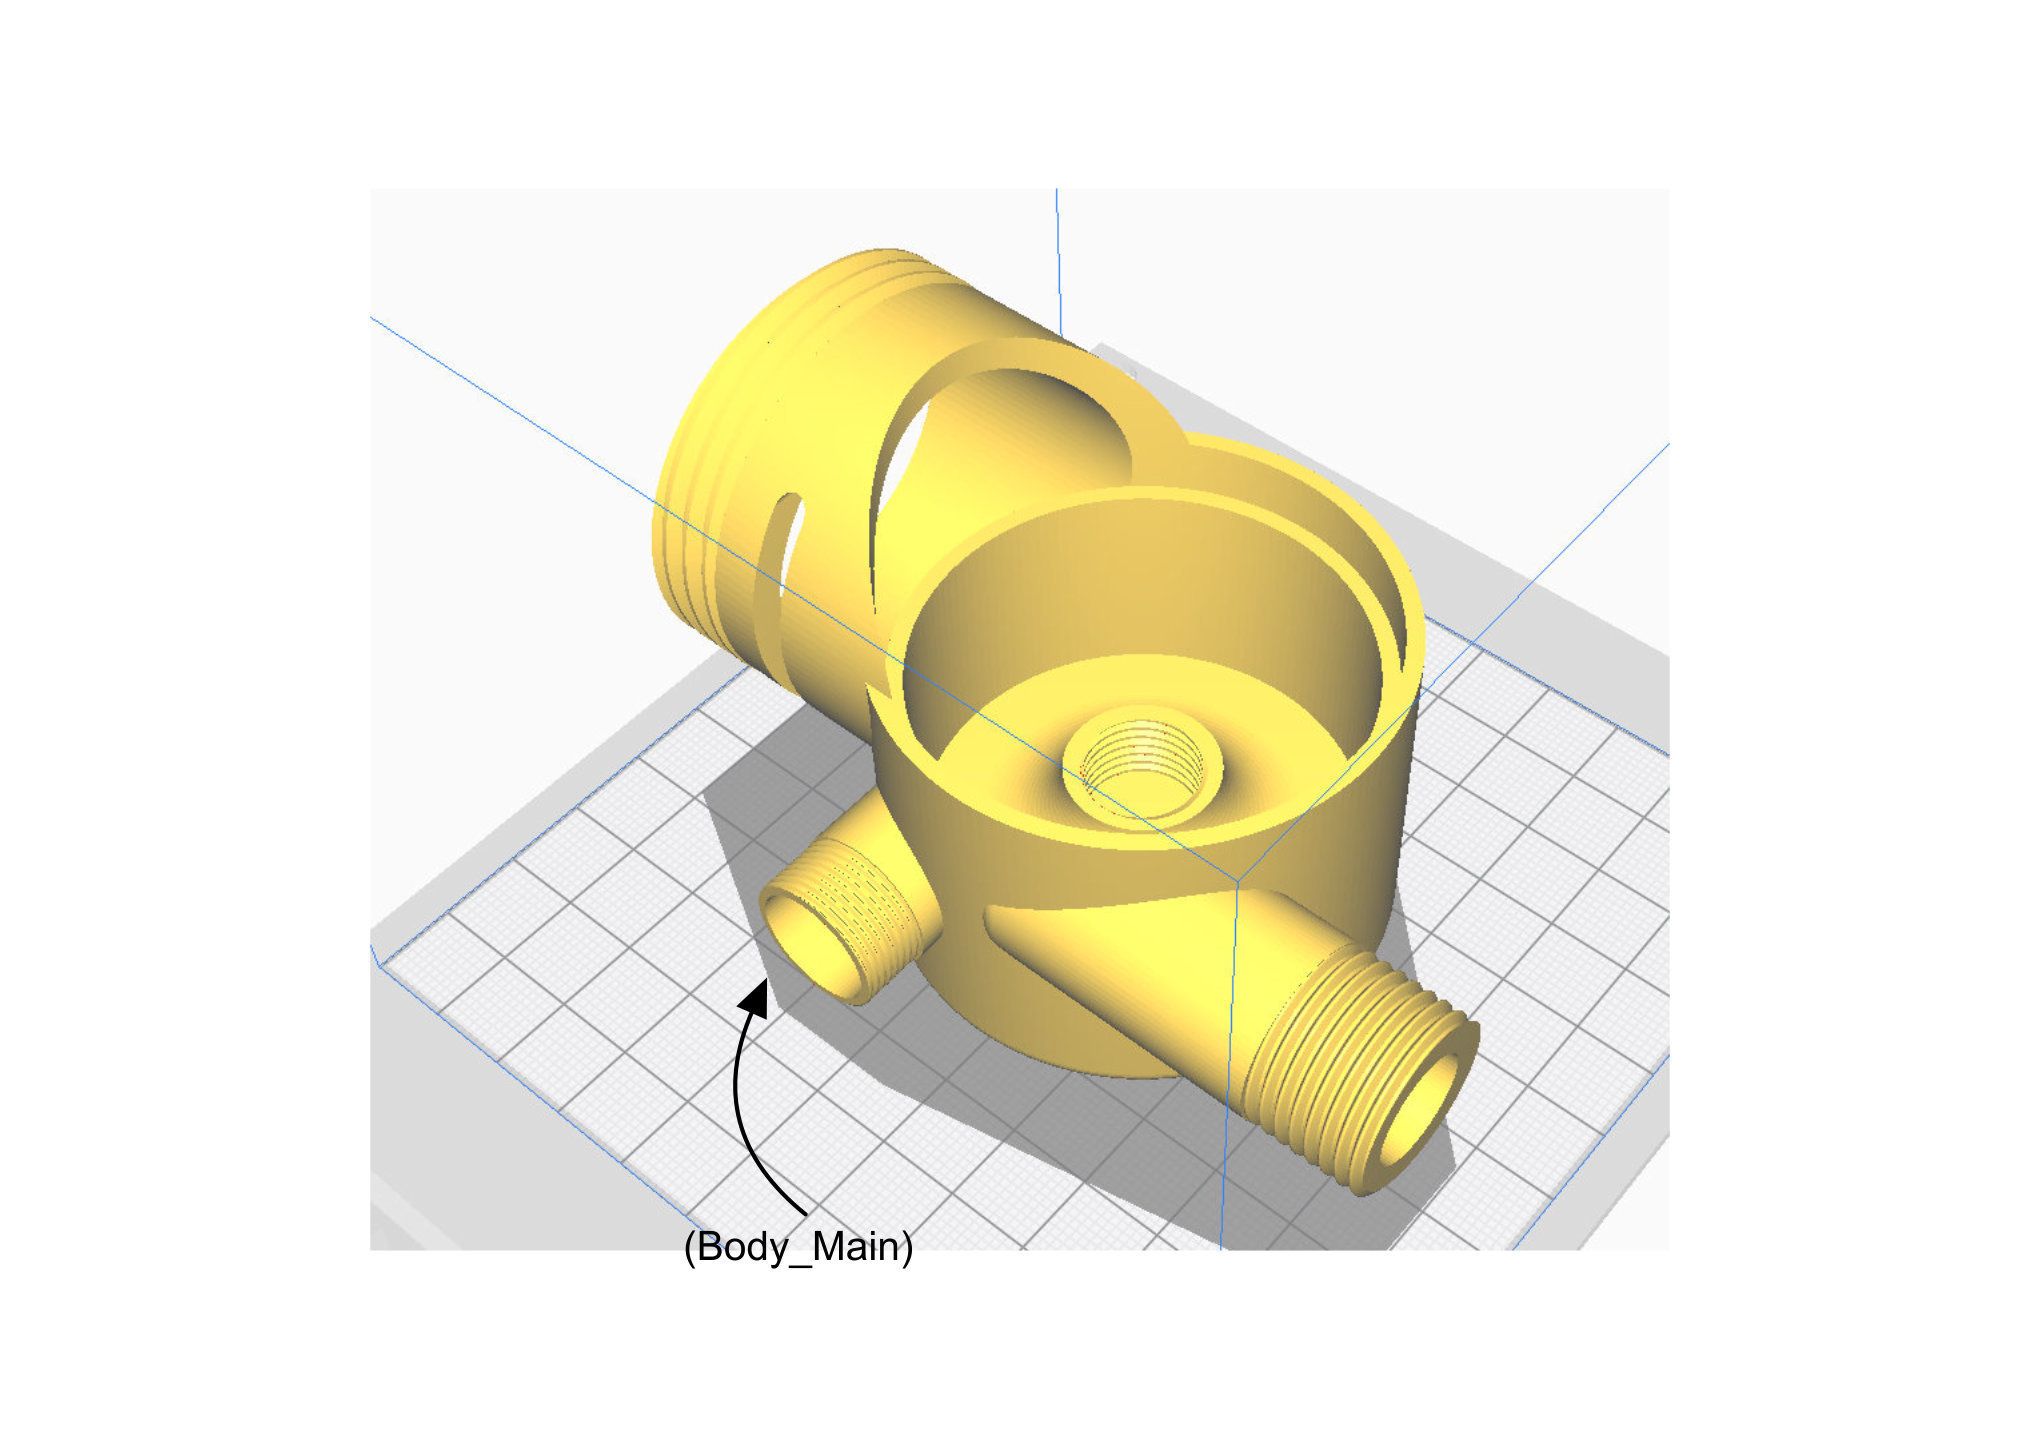 Body_Main.jpg Файл STL Вода с питанием - Массаж / Дилдо・Дизайн для загрузки и 3D-печати, Designs-a-lot